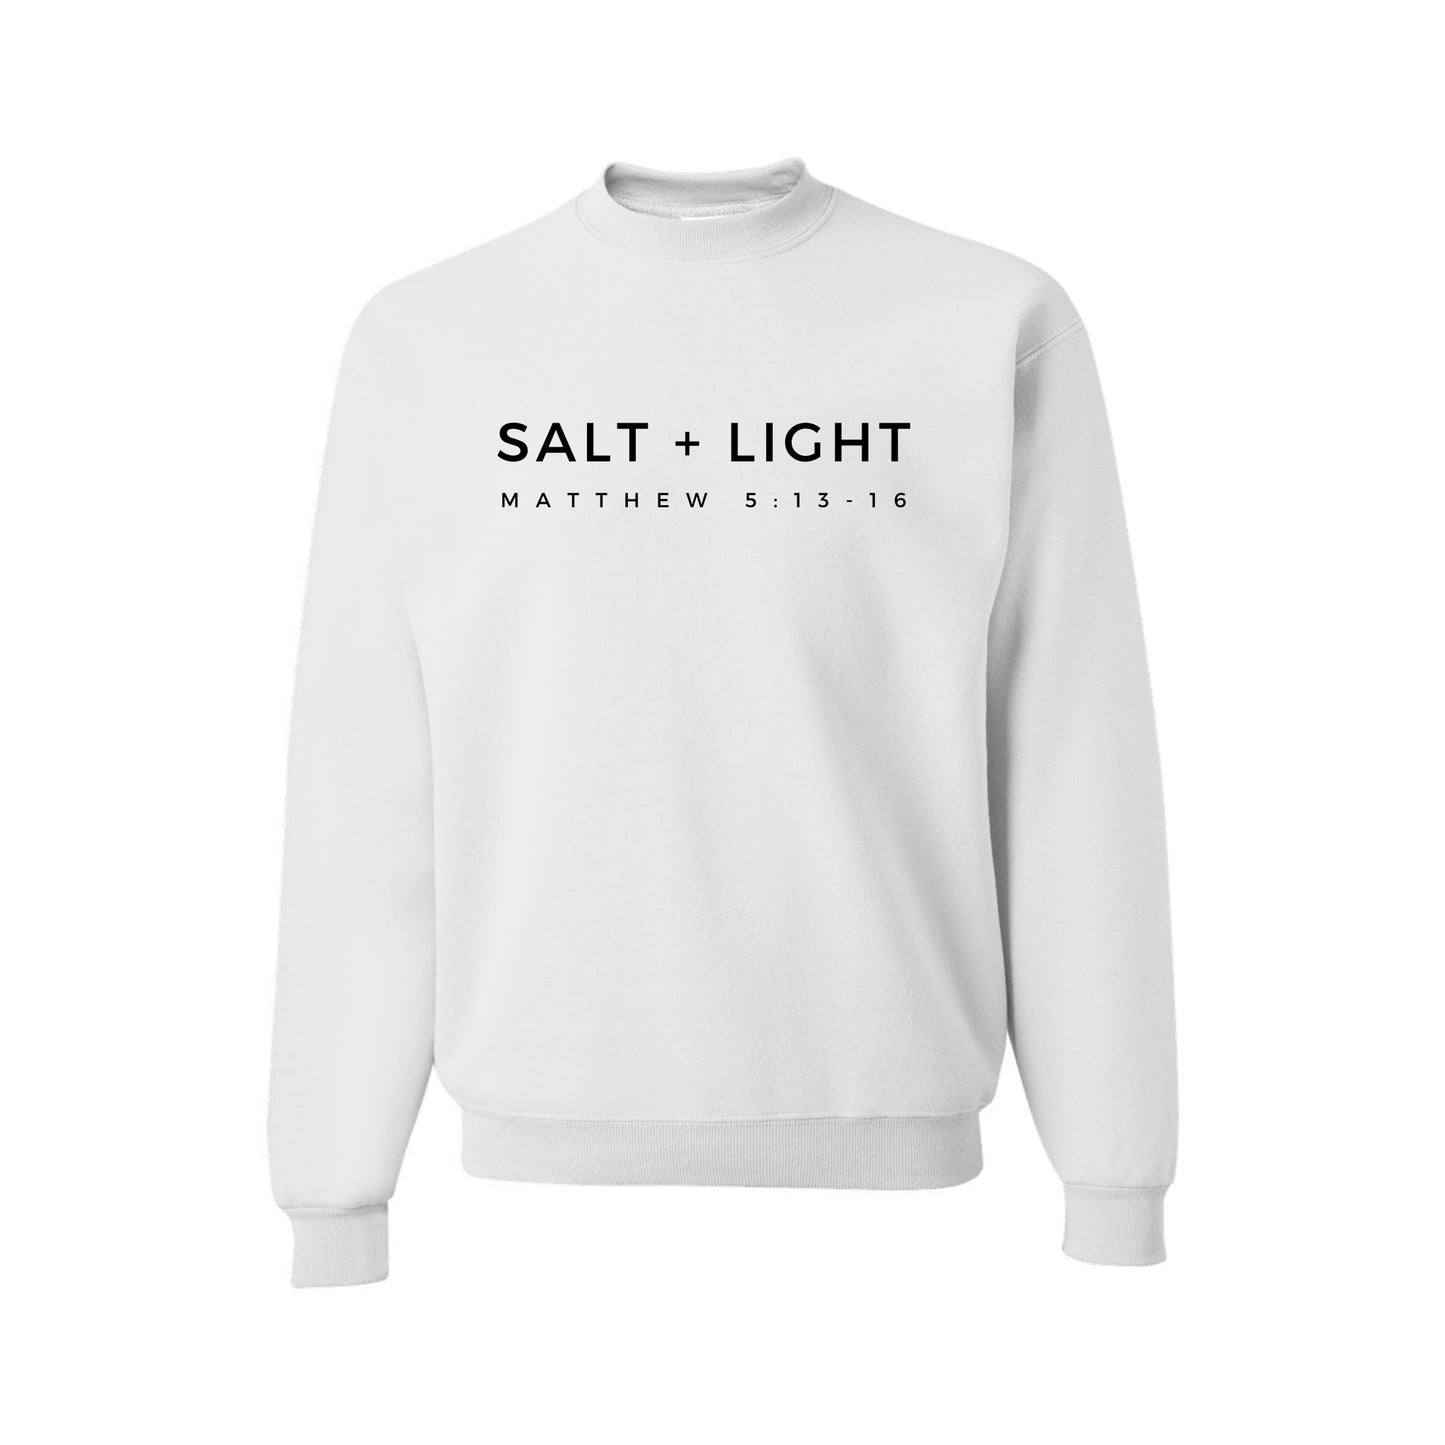 SALT + LIGHT CREW